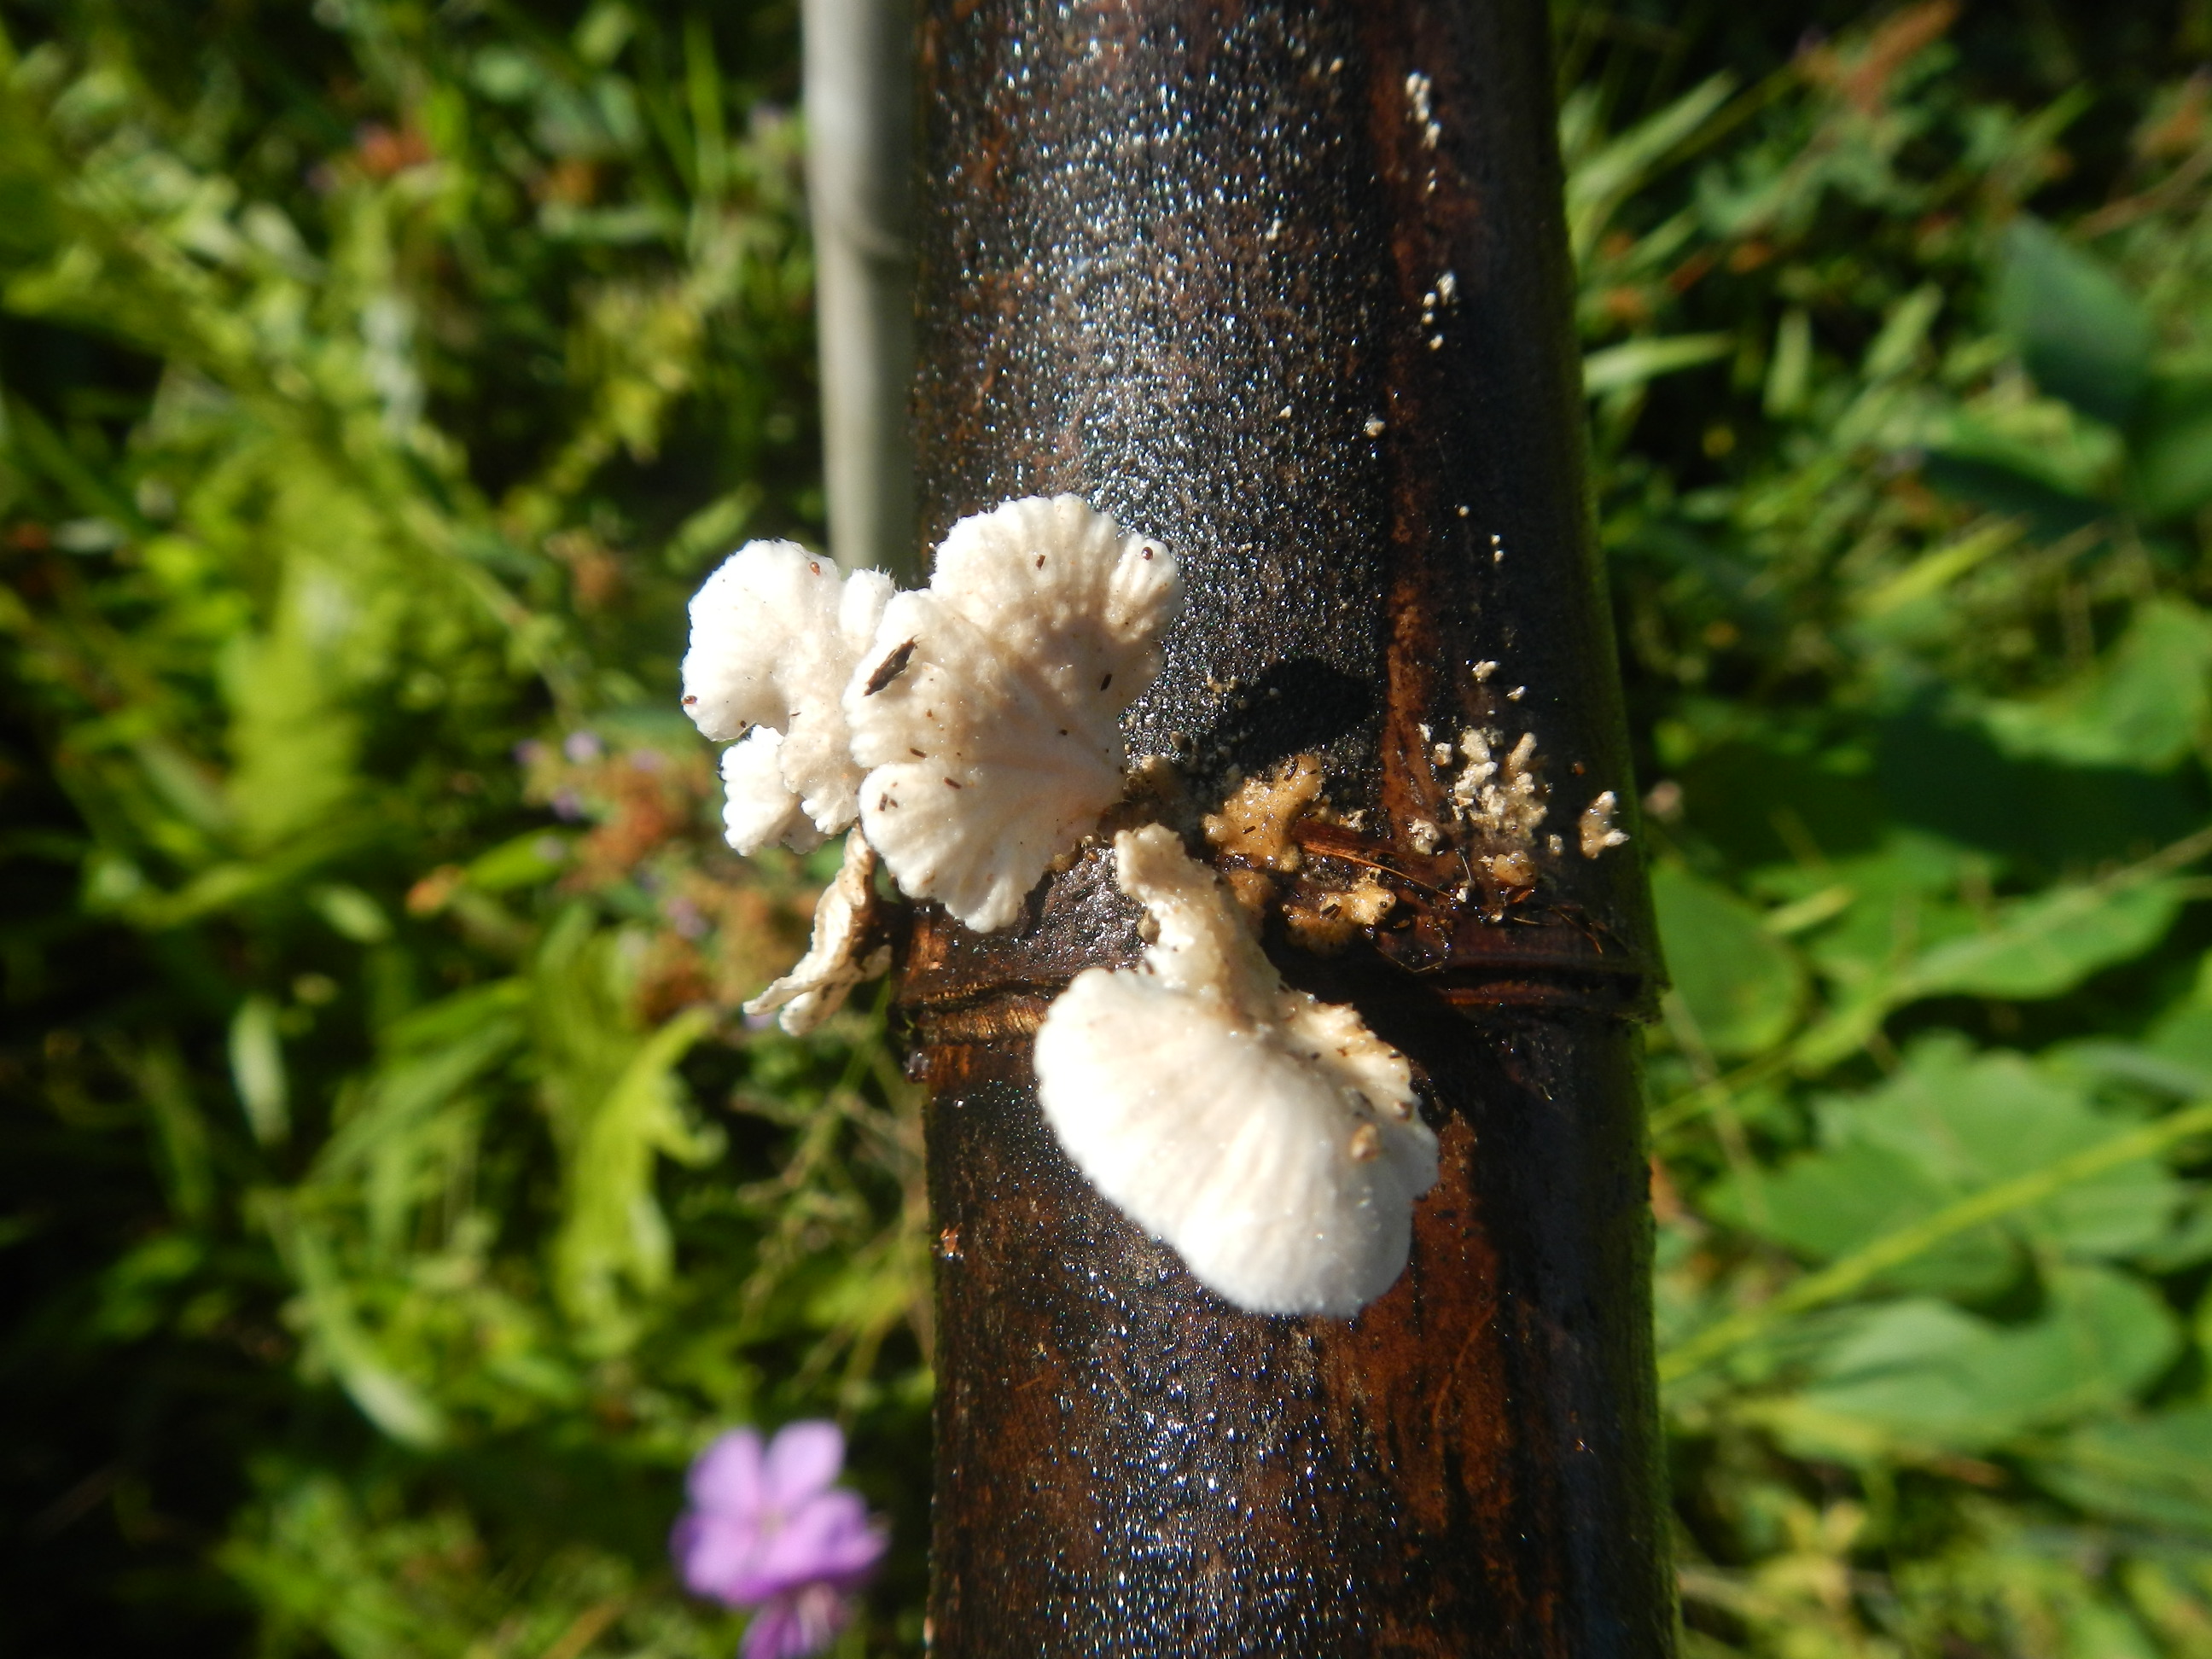 20140224 Fazenda Agroecologia Cogumelo funghi no bambu ADAE 001.jpg